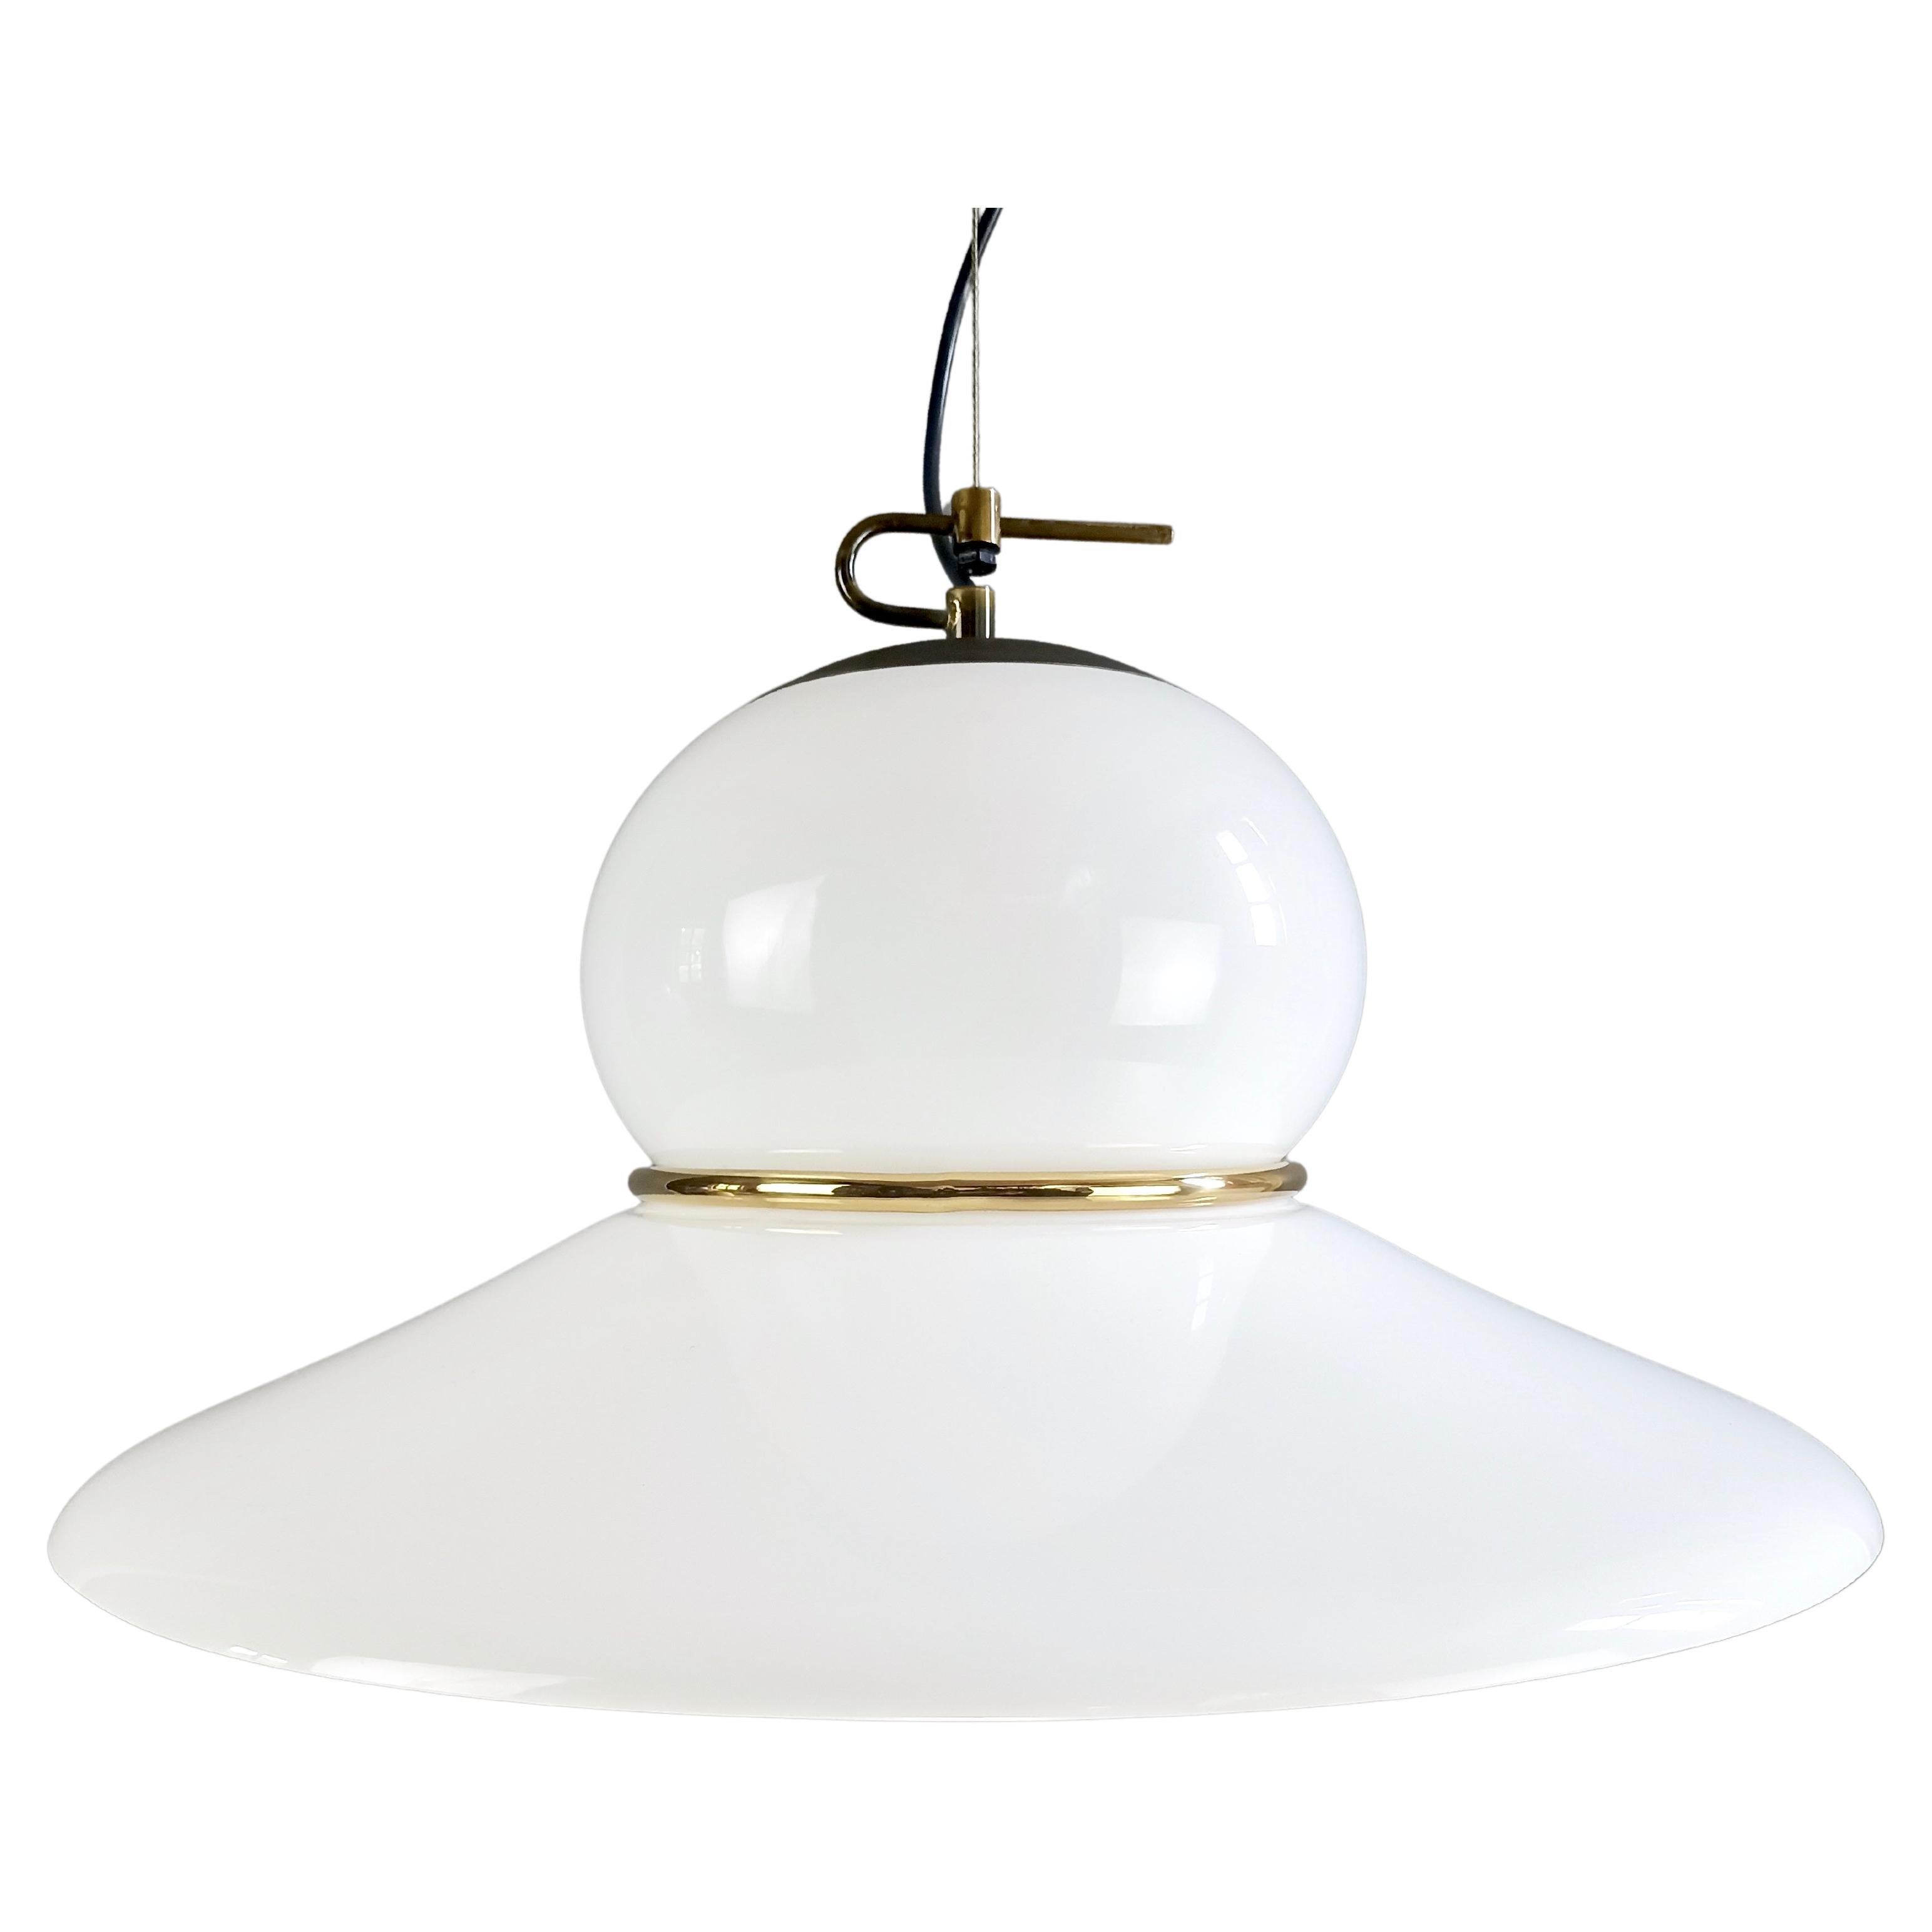 1970s Italian Plastic and Brass Pendant Lamp For Sale